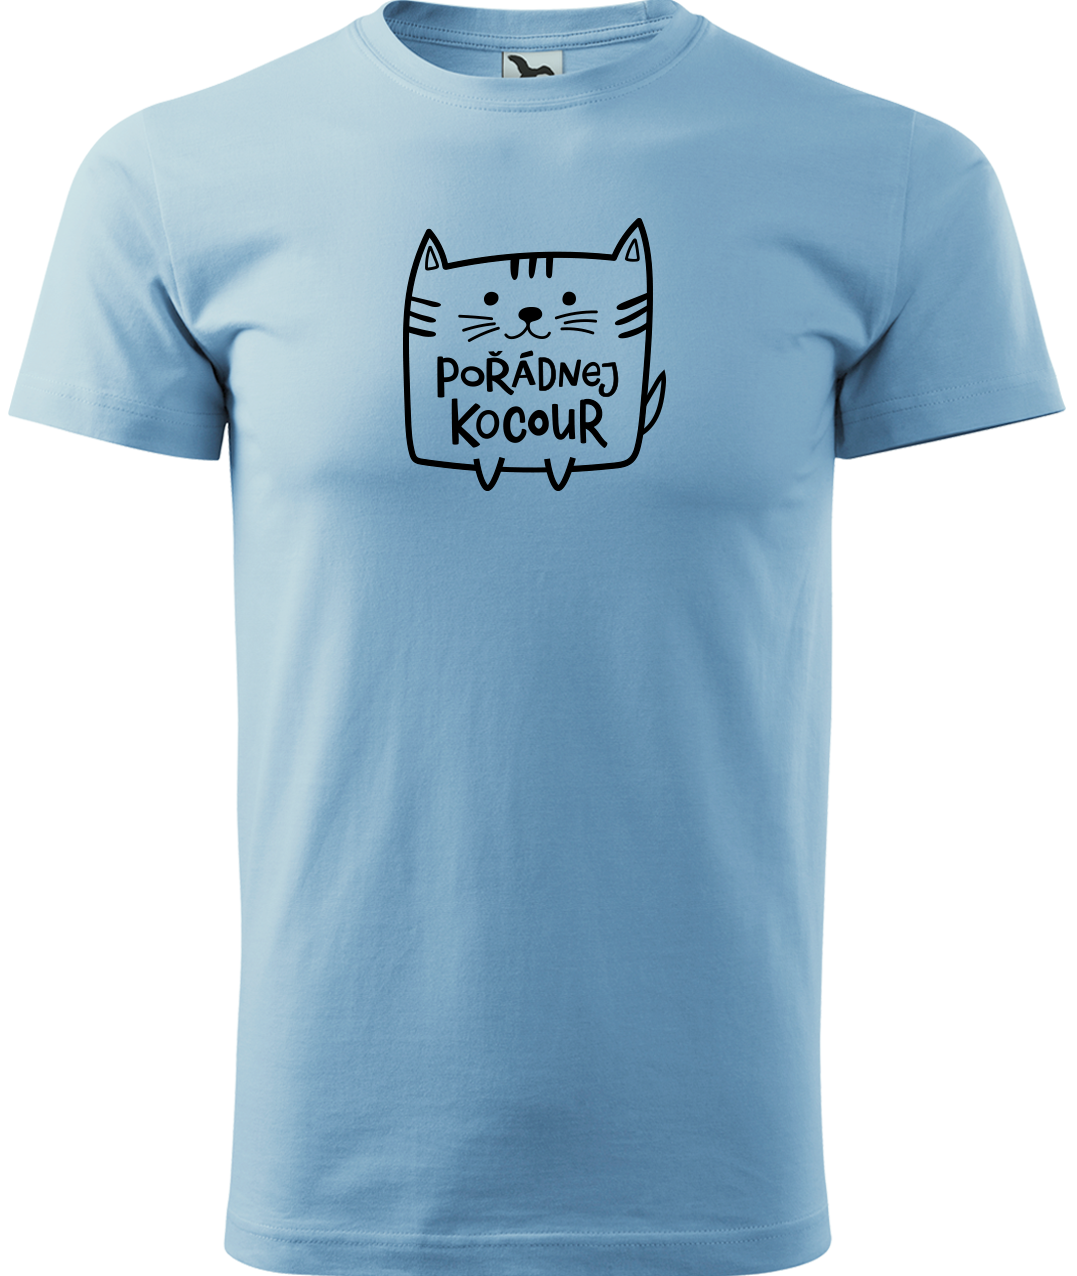 Pánské tričko s kočkou - Pořádnej kocour Velikost: XL, Barva: Nebesky modrá (15)